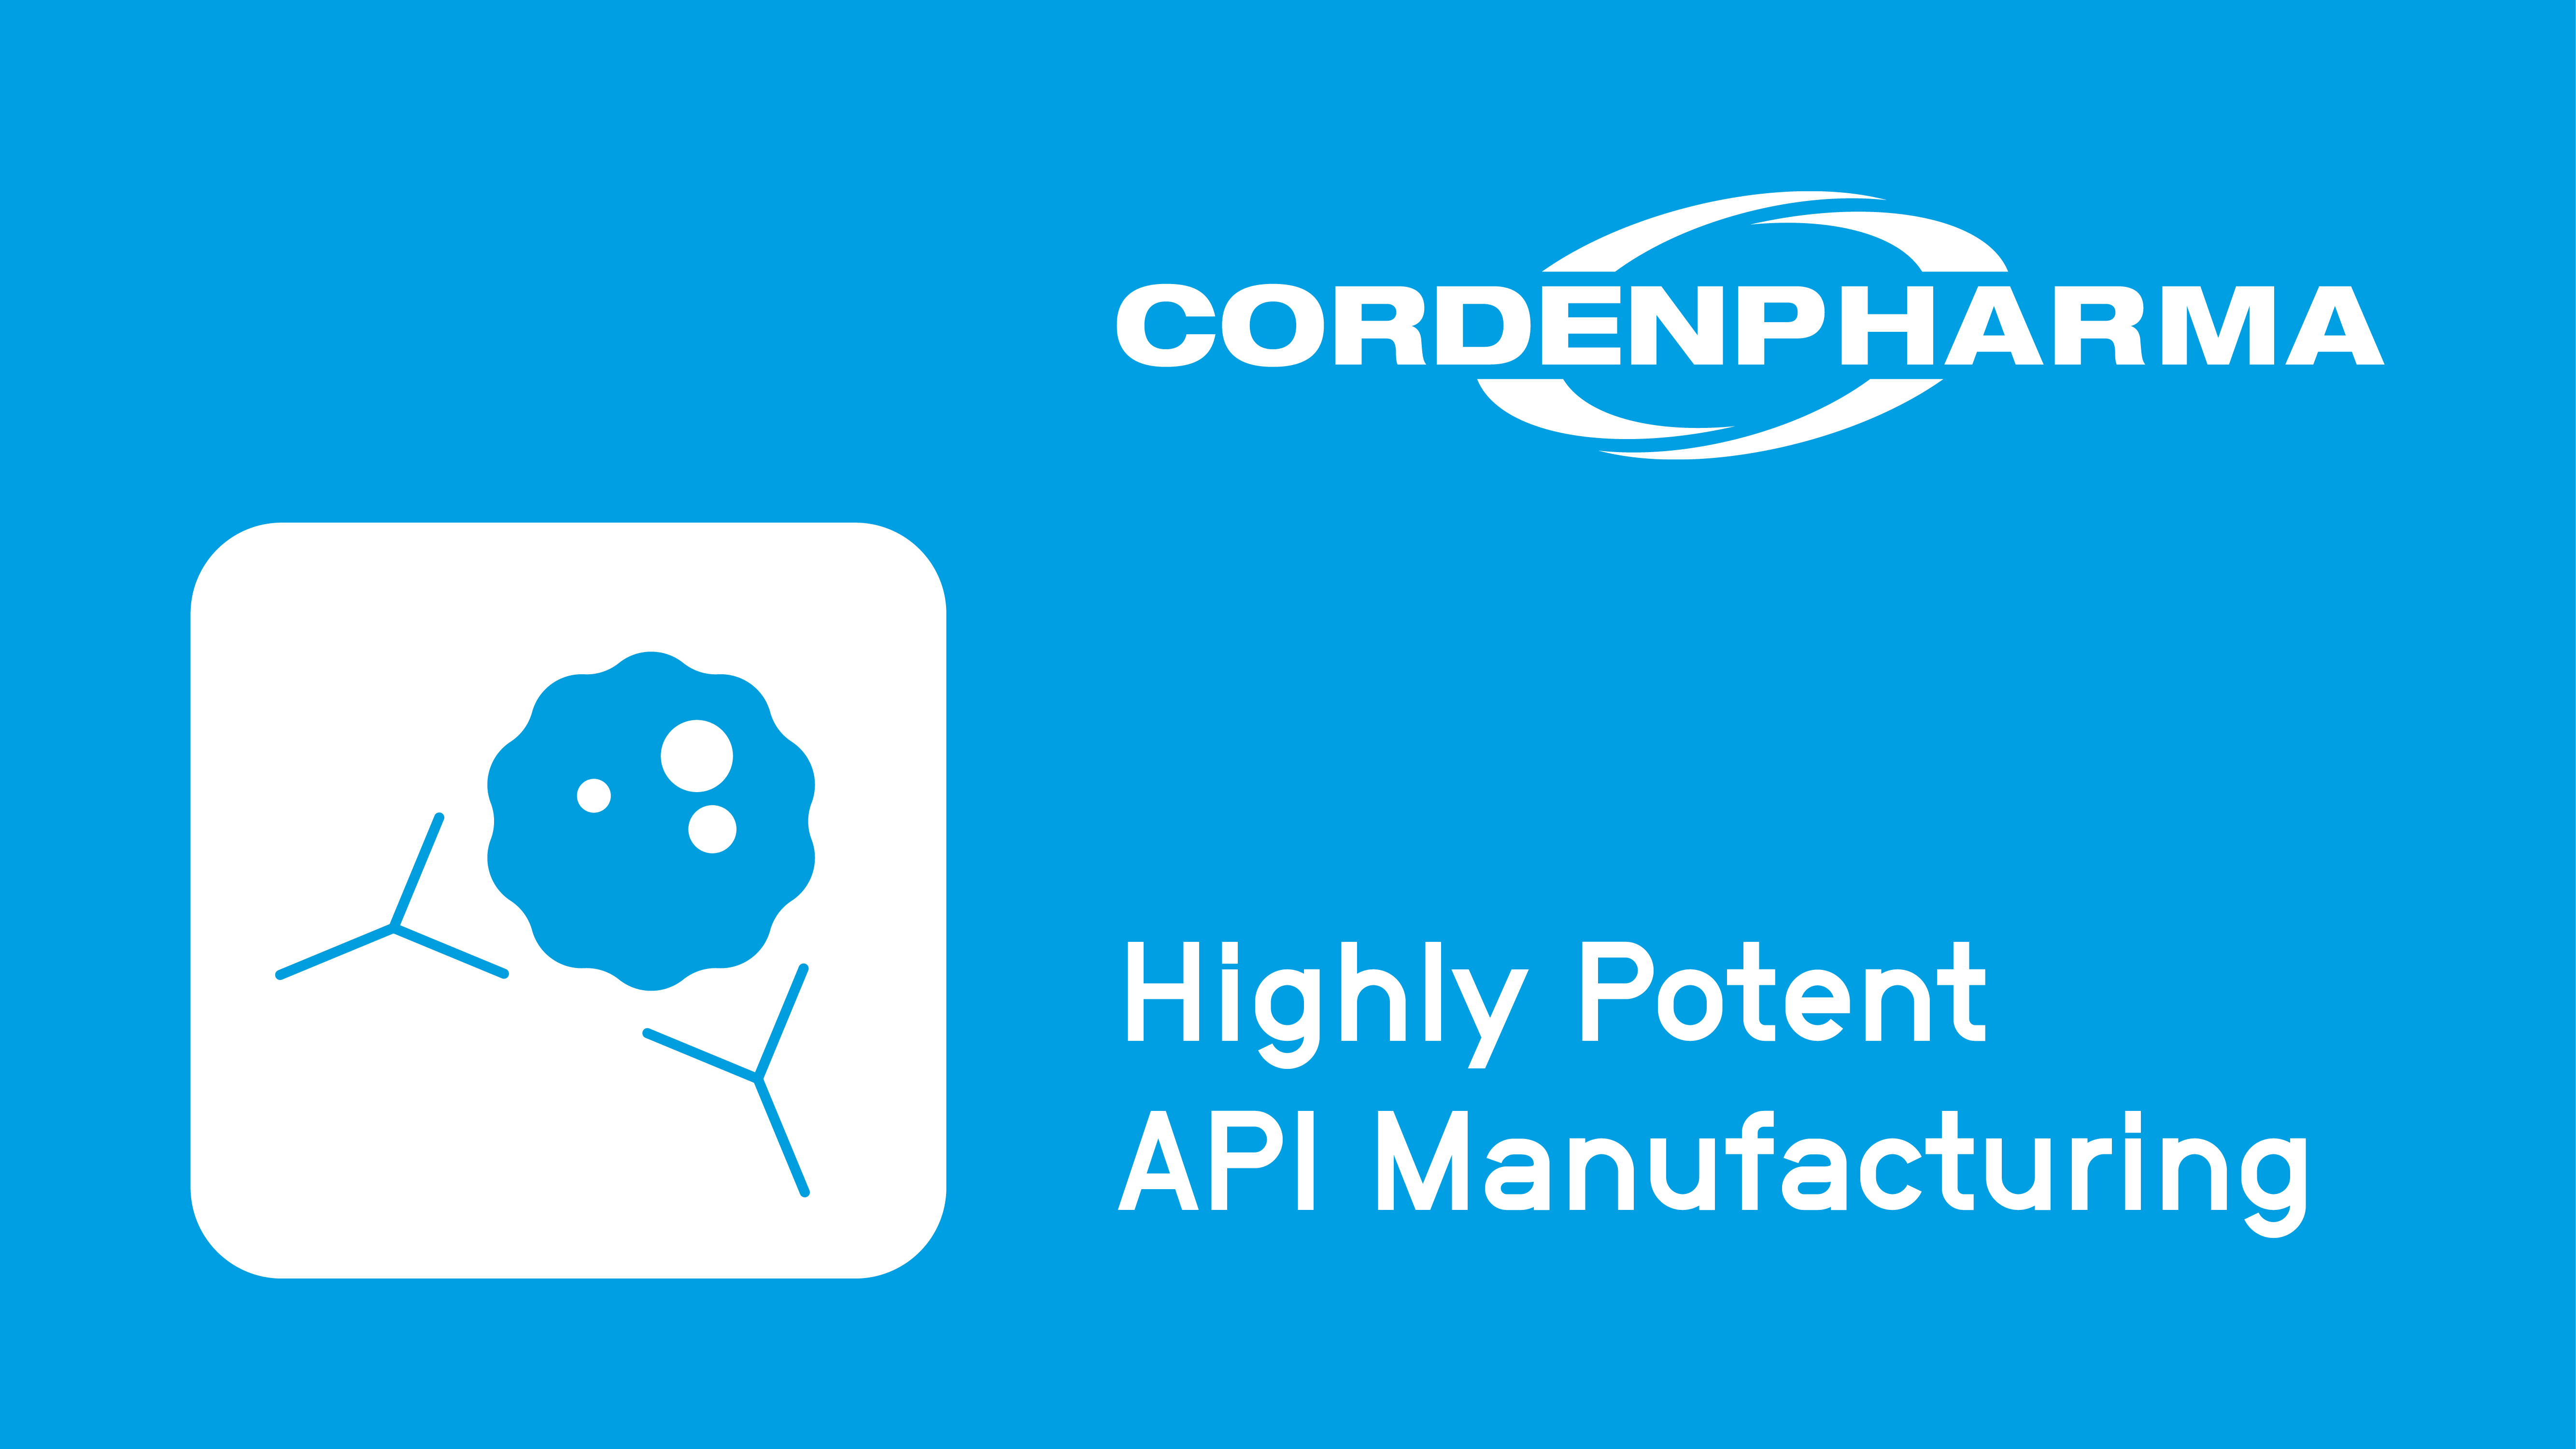 Video > CordenPharma Highly Potent API Manufacturing